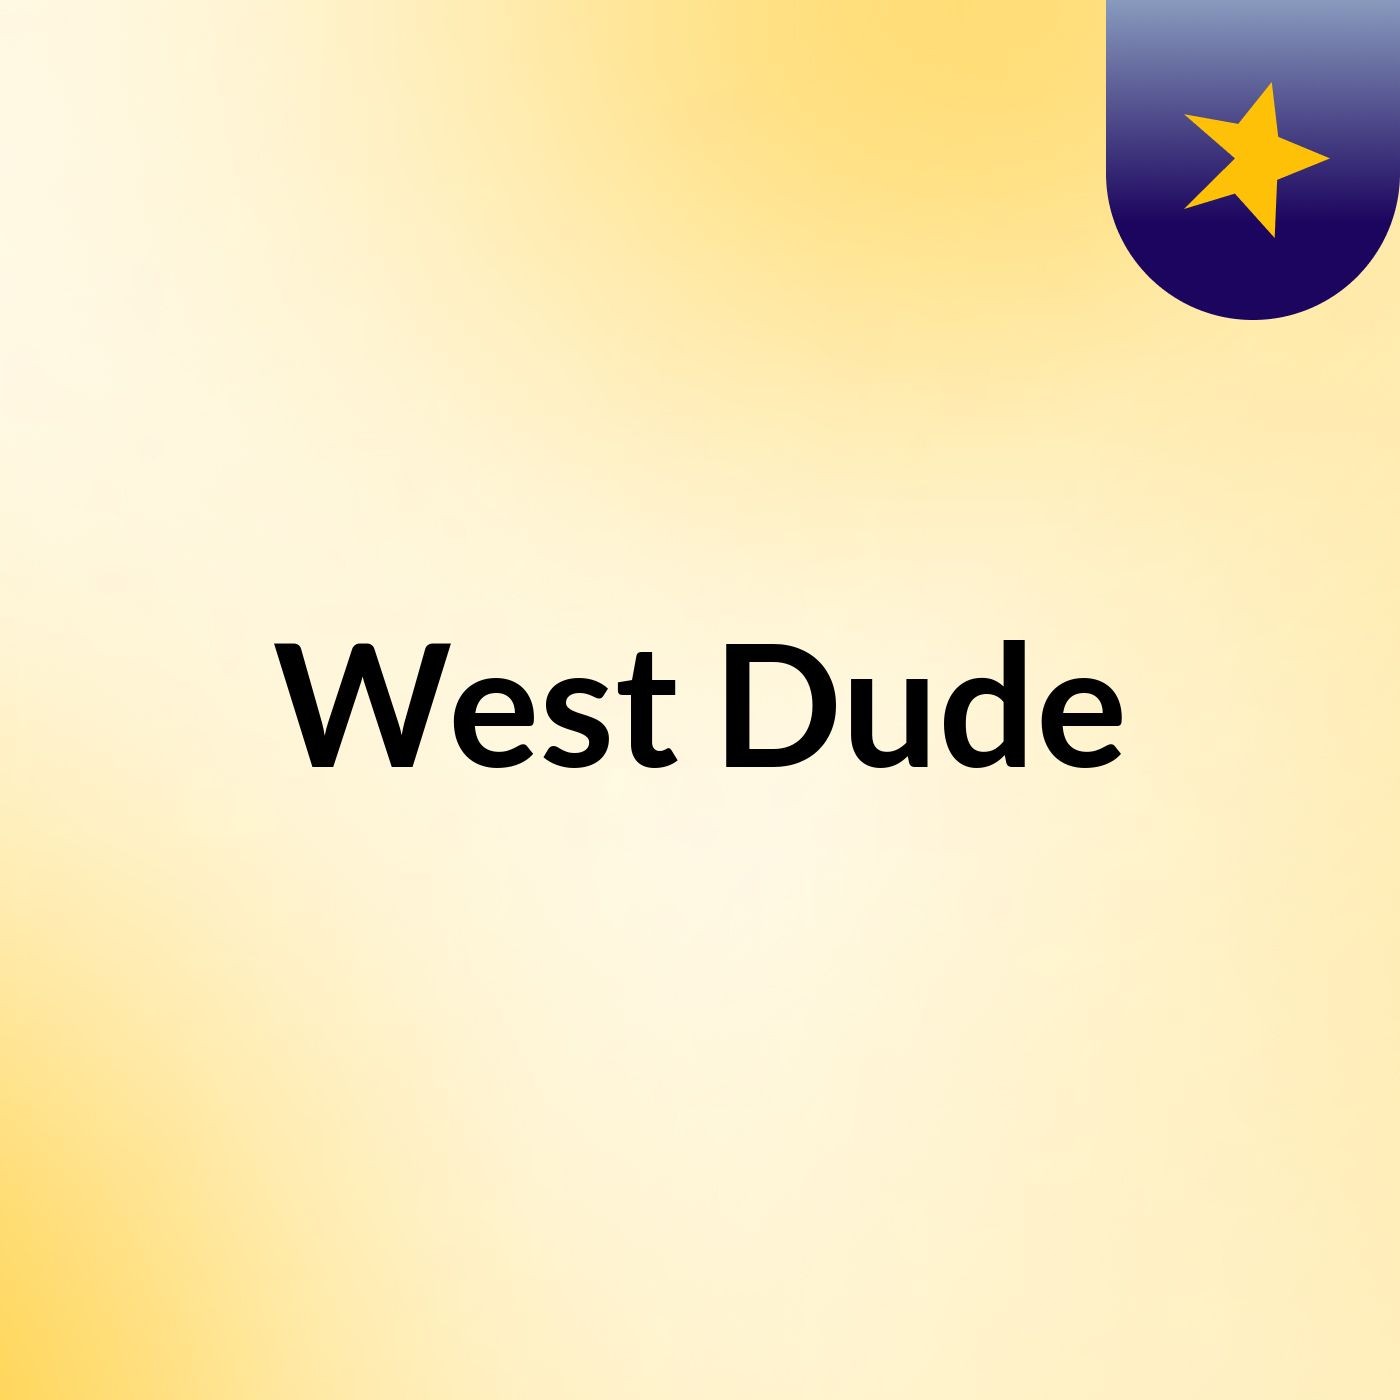 West Dude